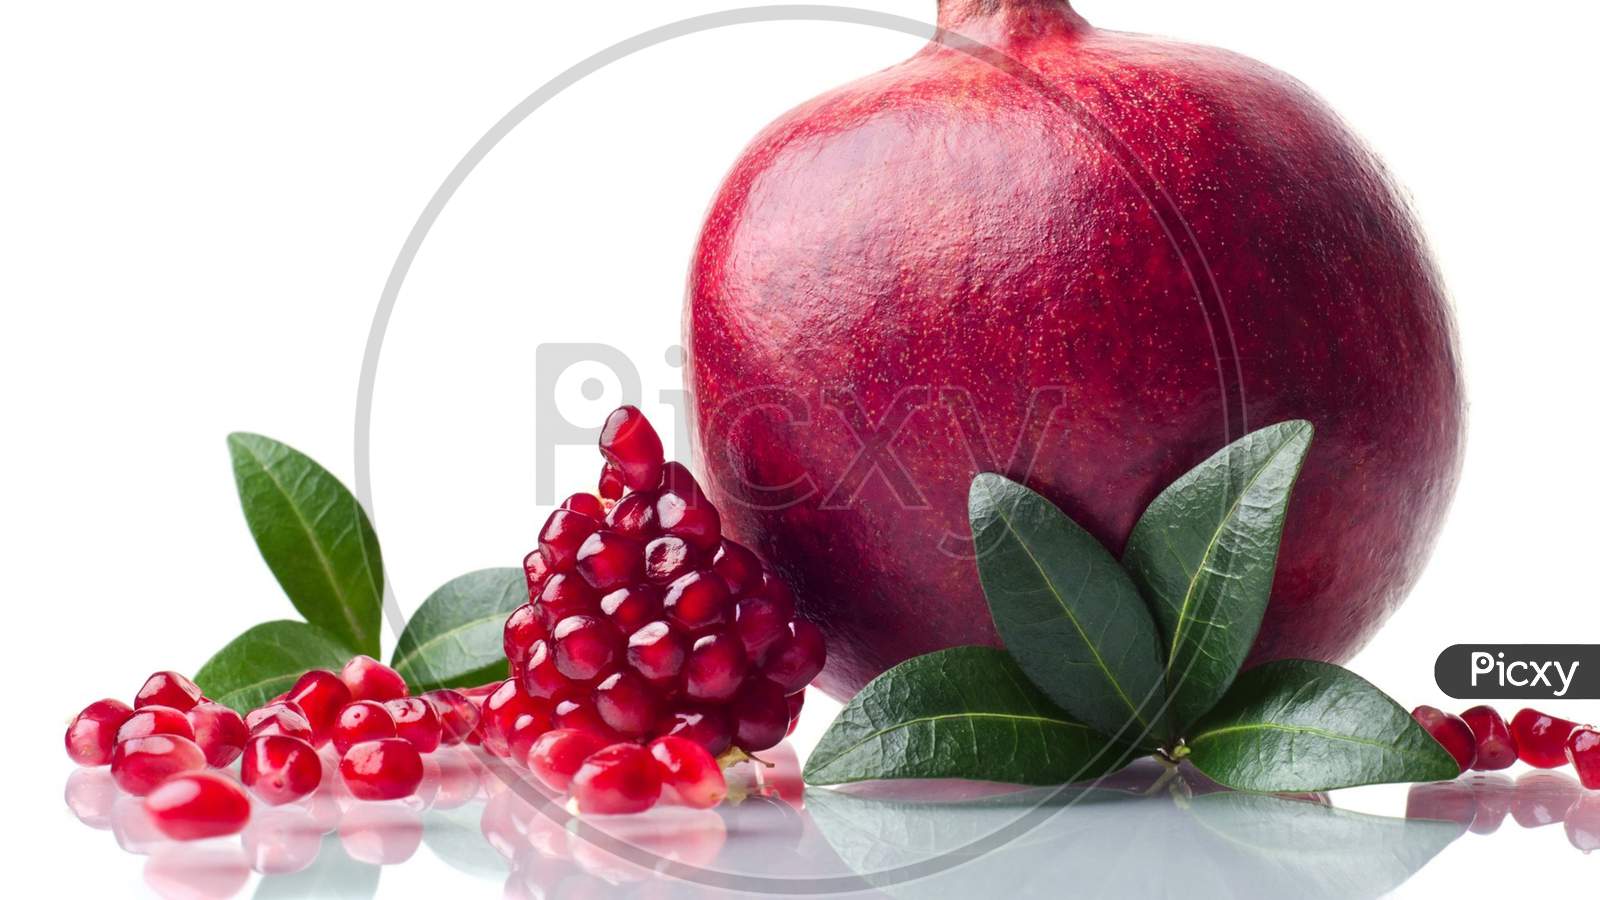 Pomegranate in white background